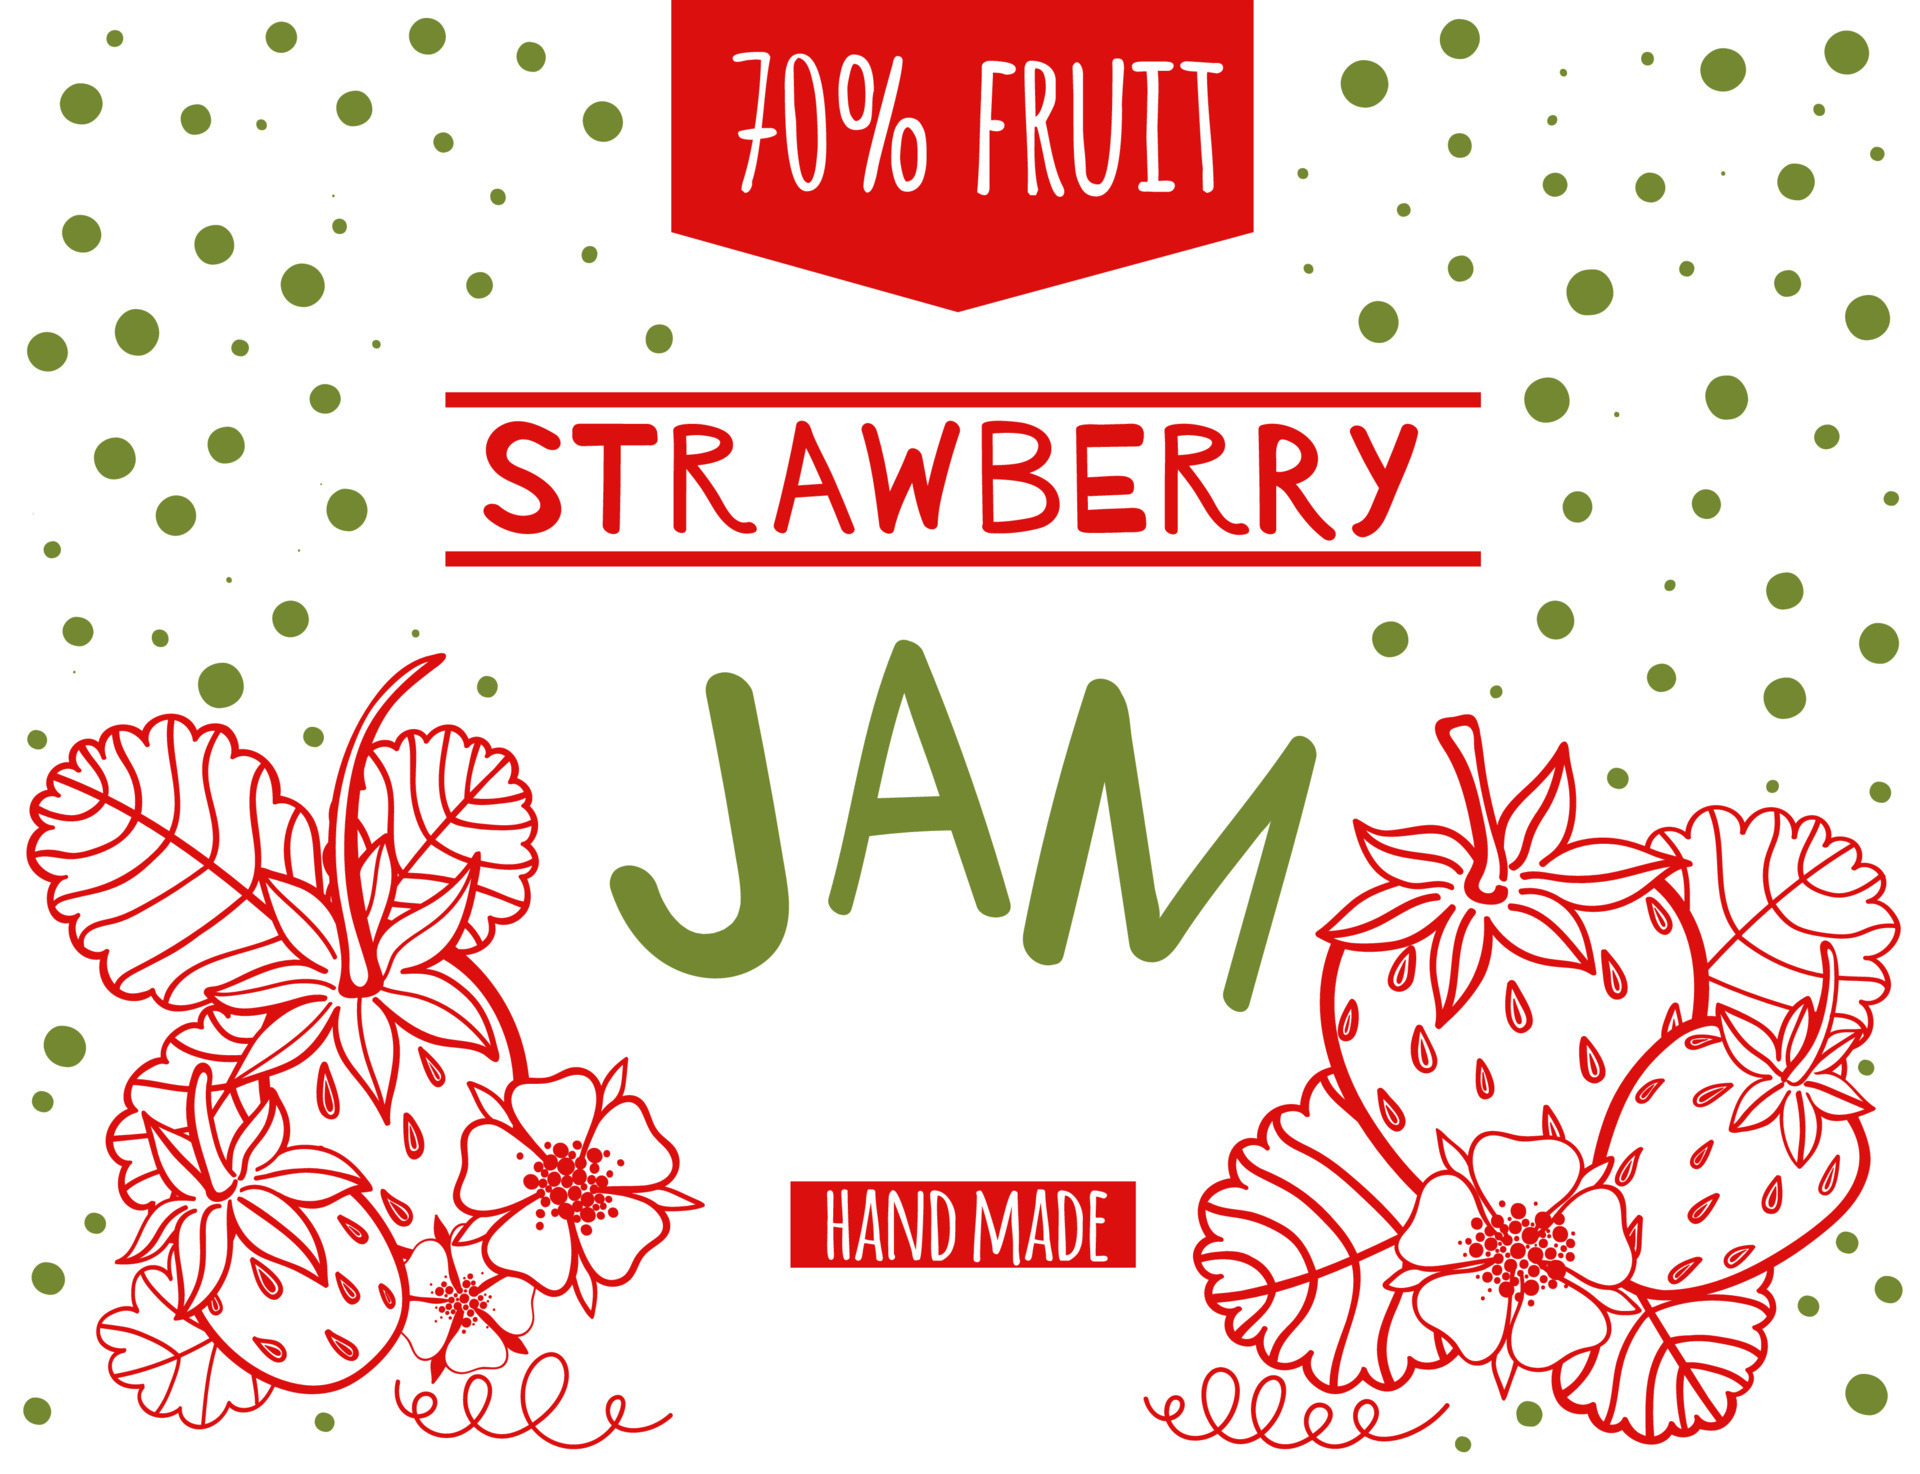 jam labels clipart free